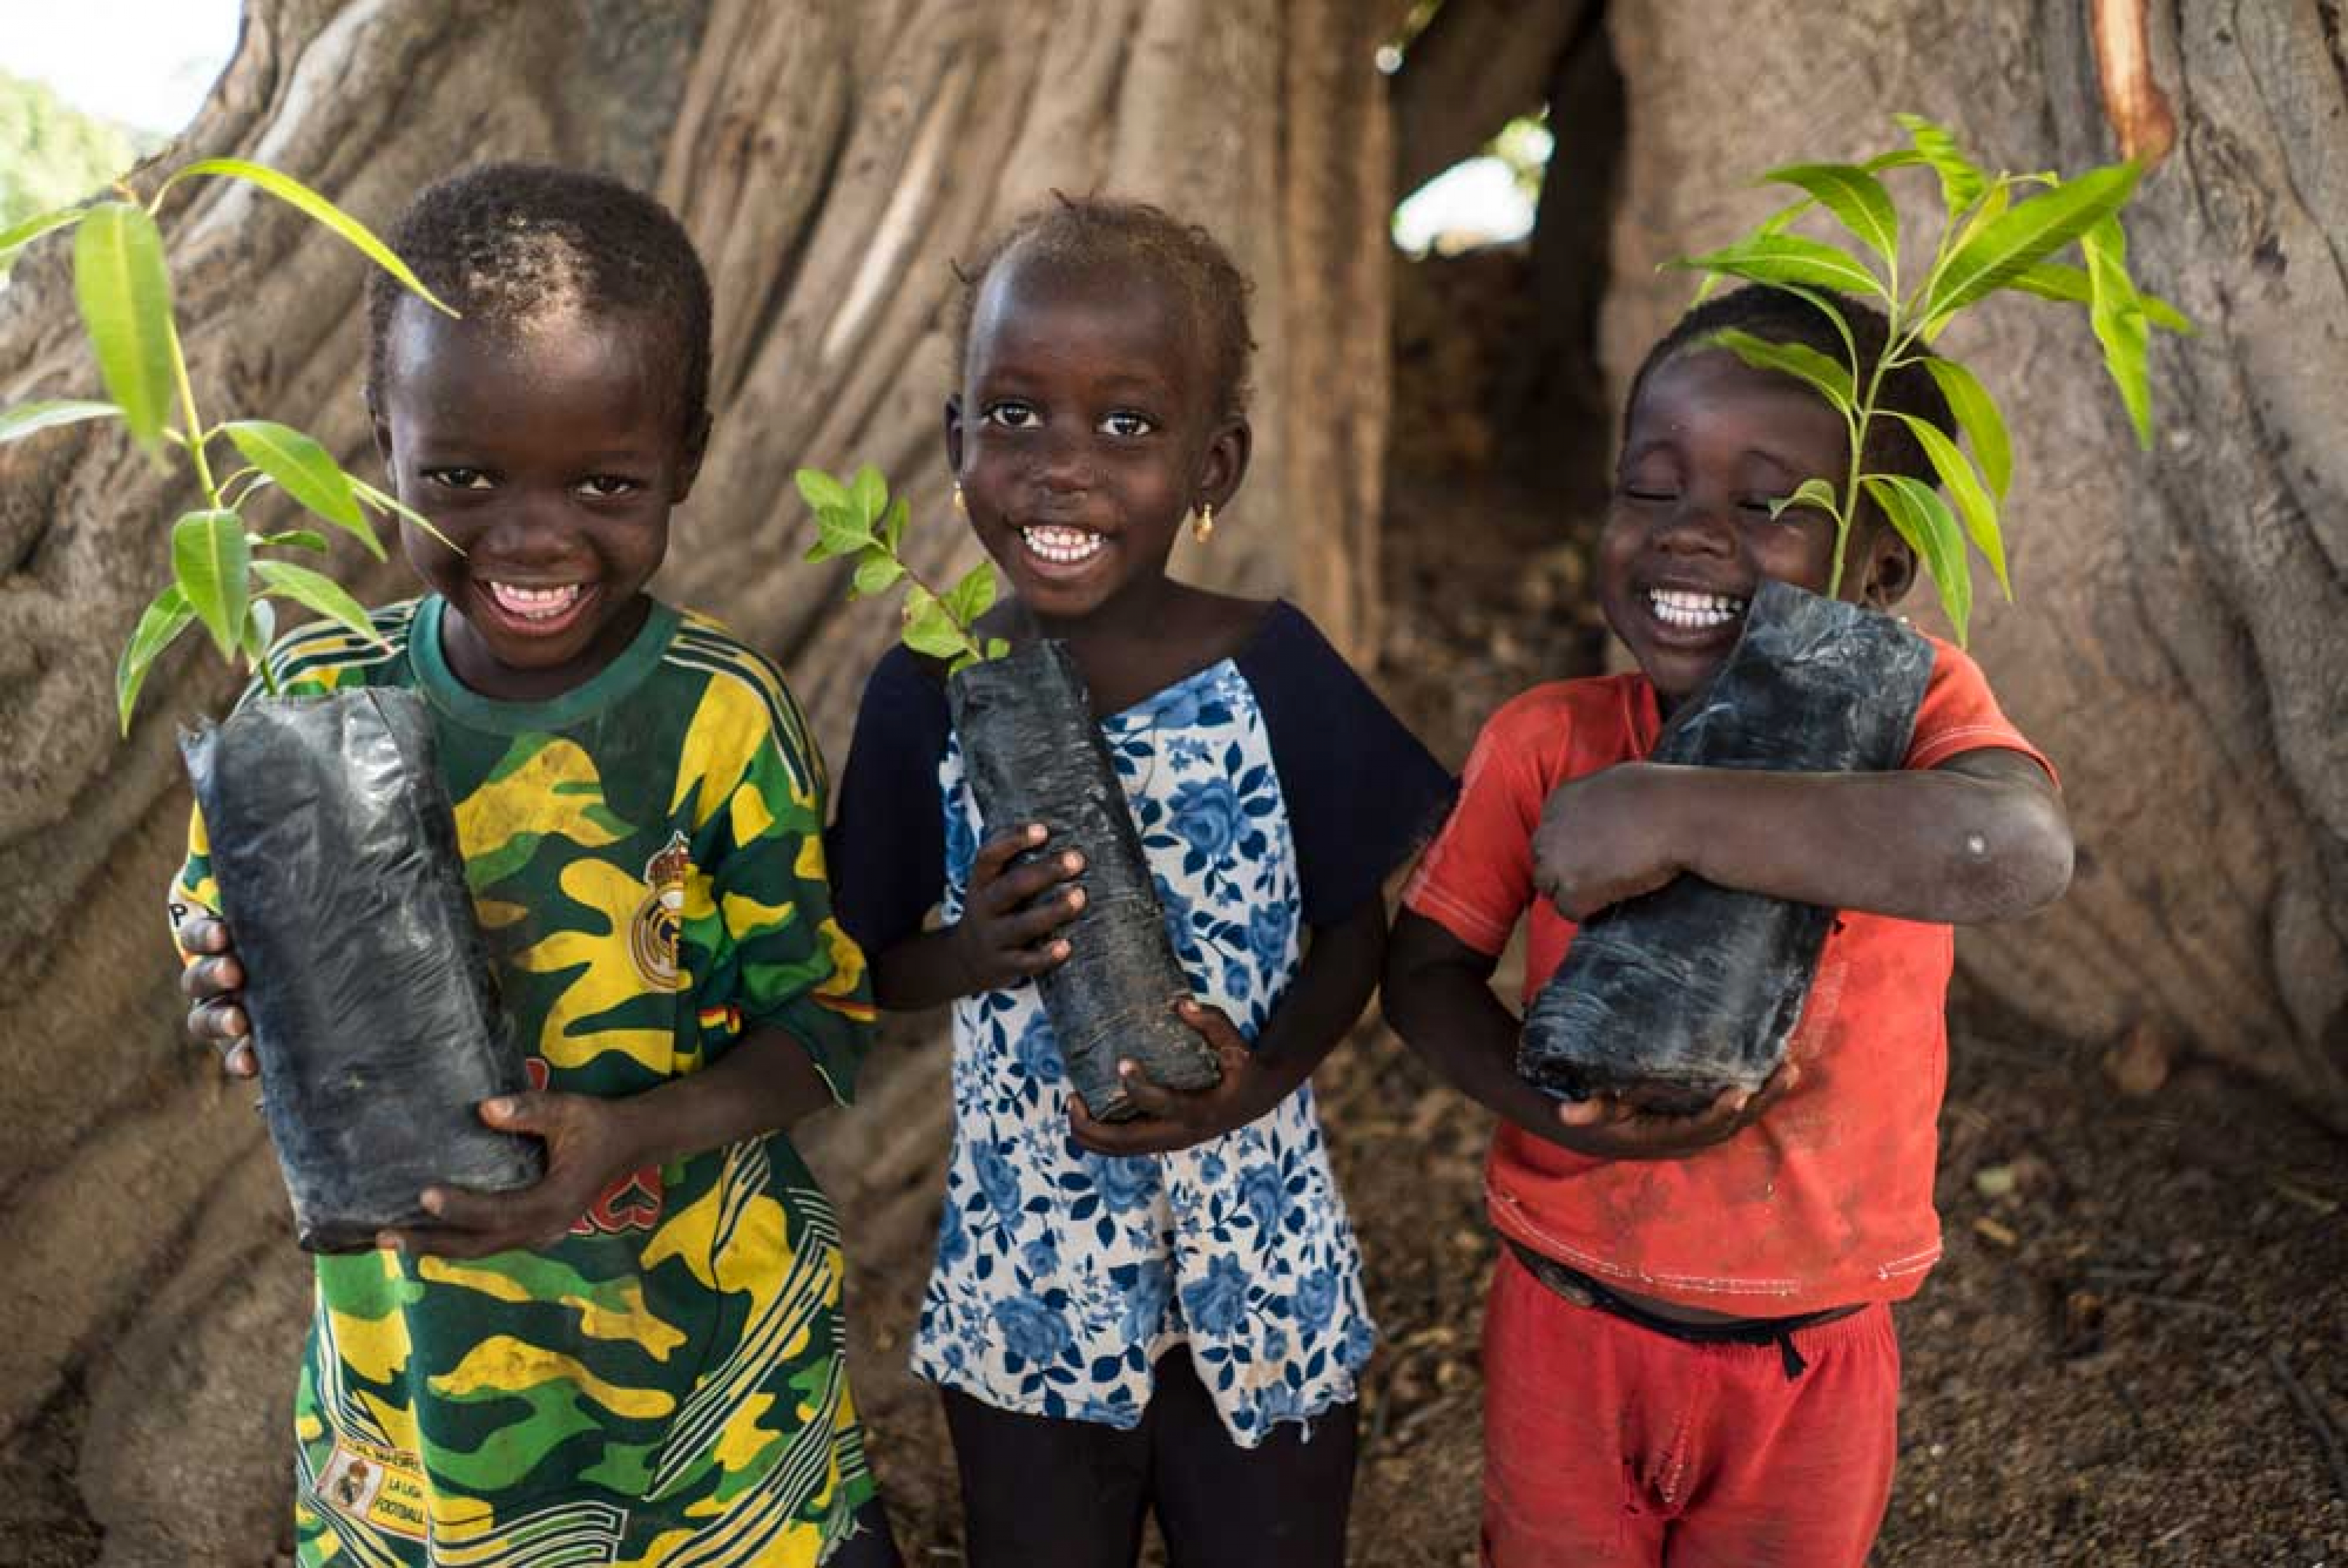 Children in Senegal thanking Eminence Organic Skin Care for planting trees